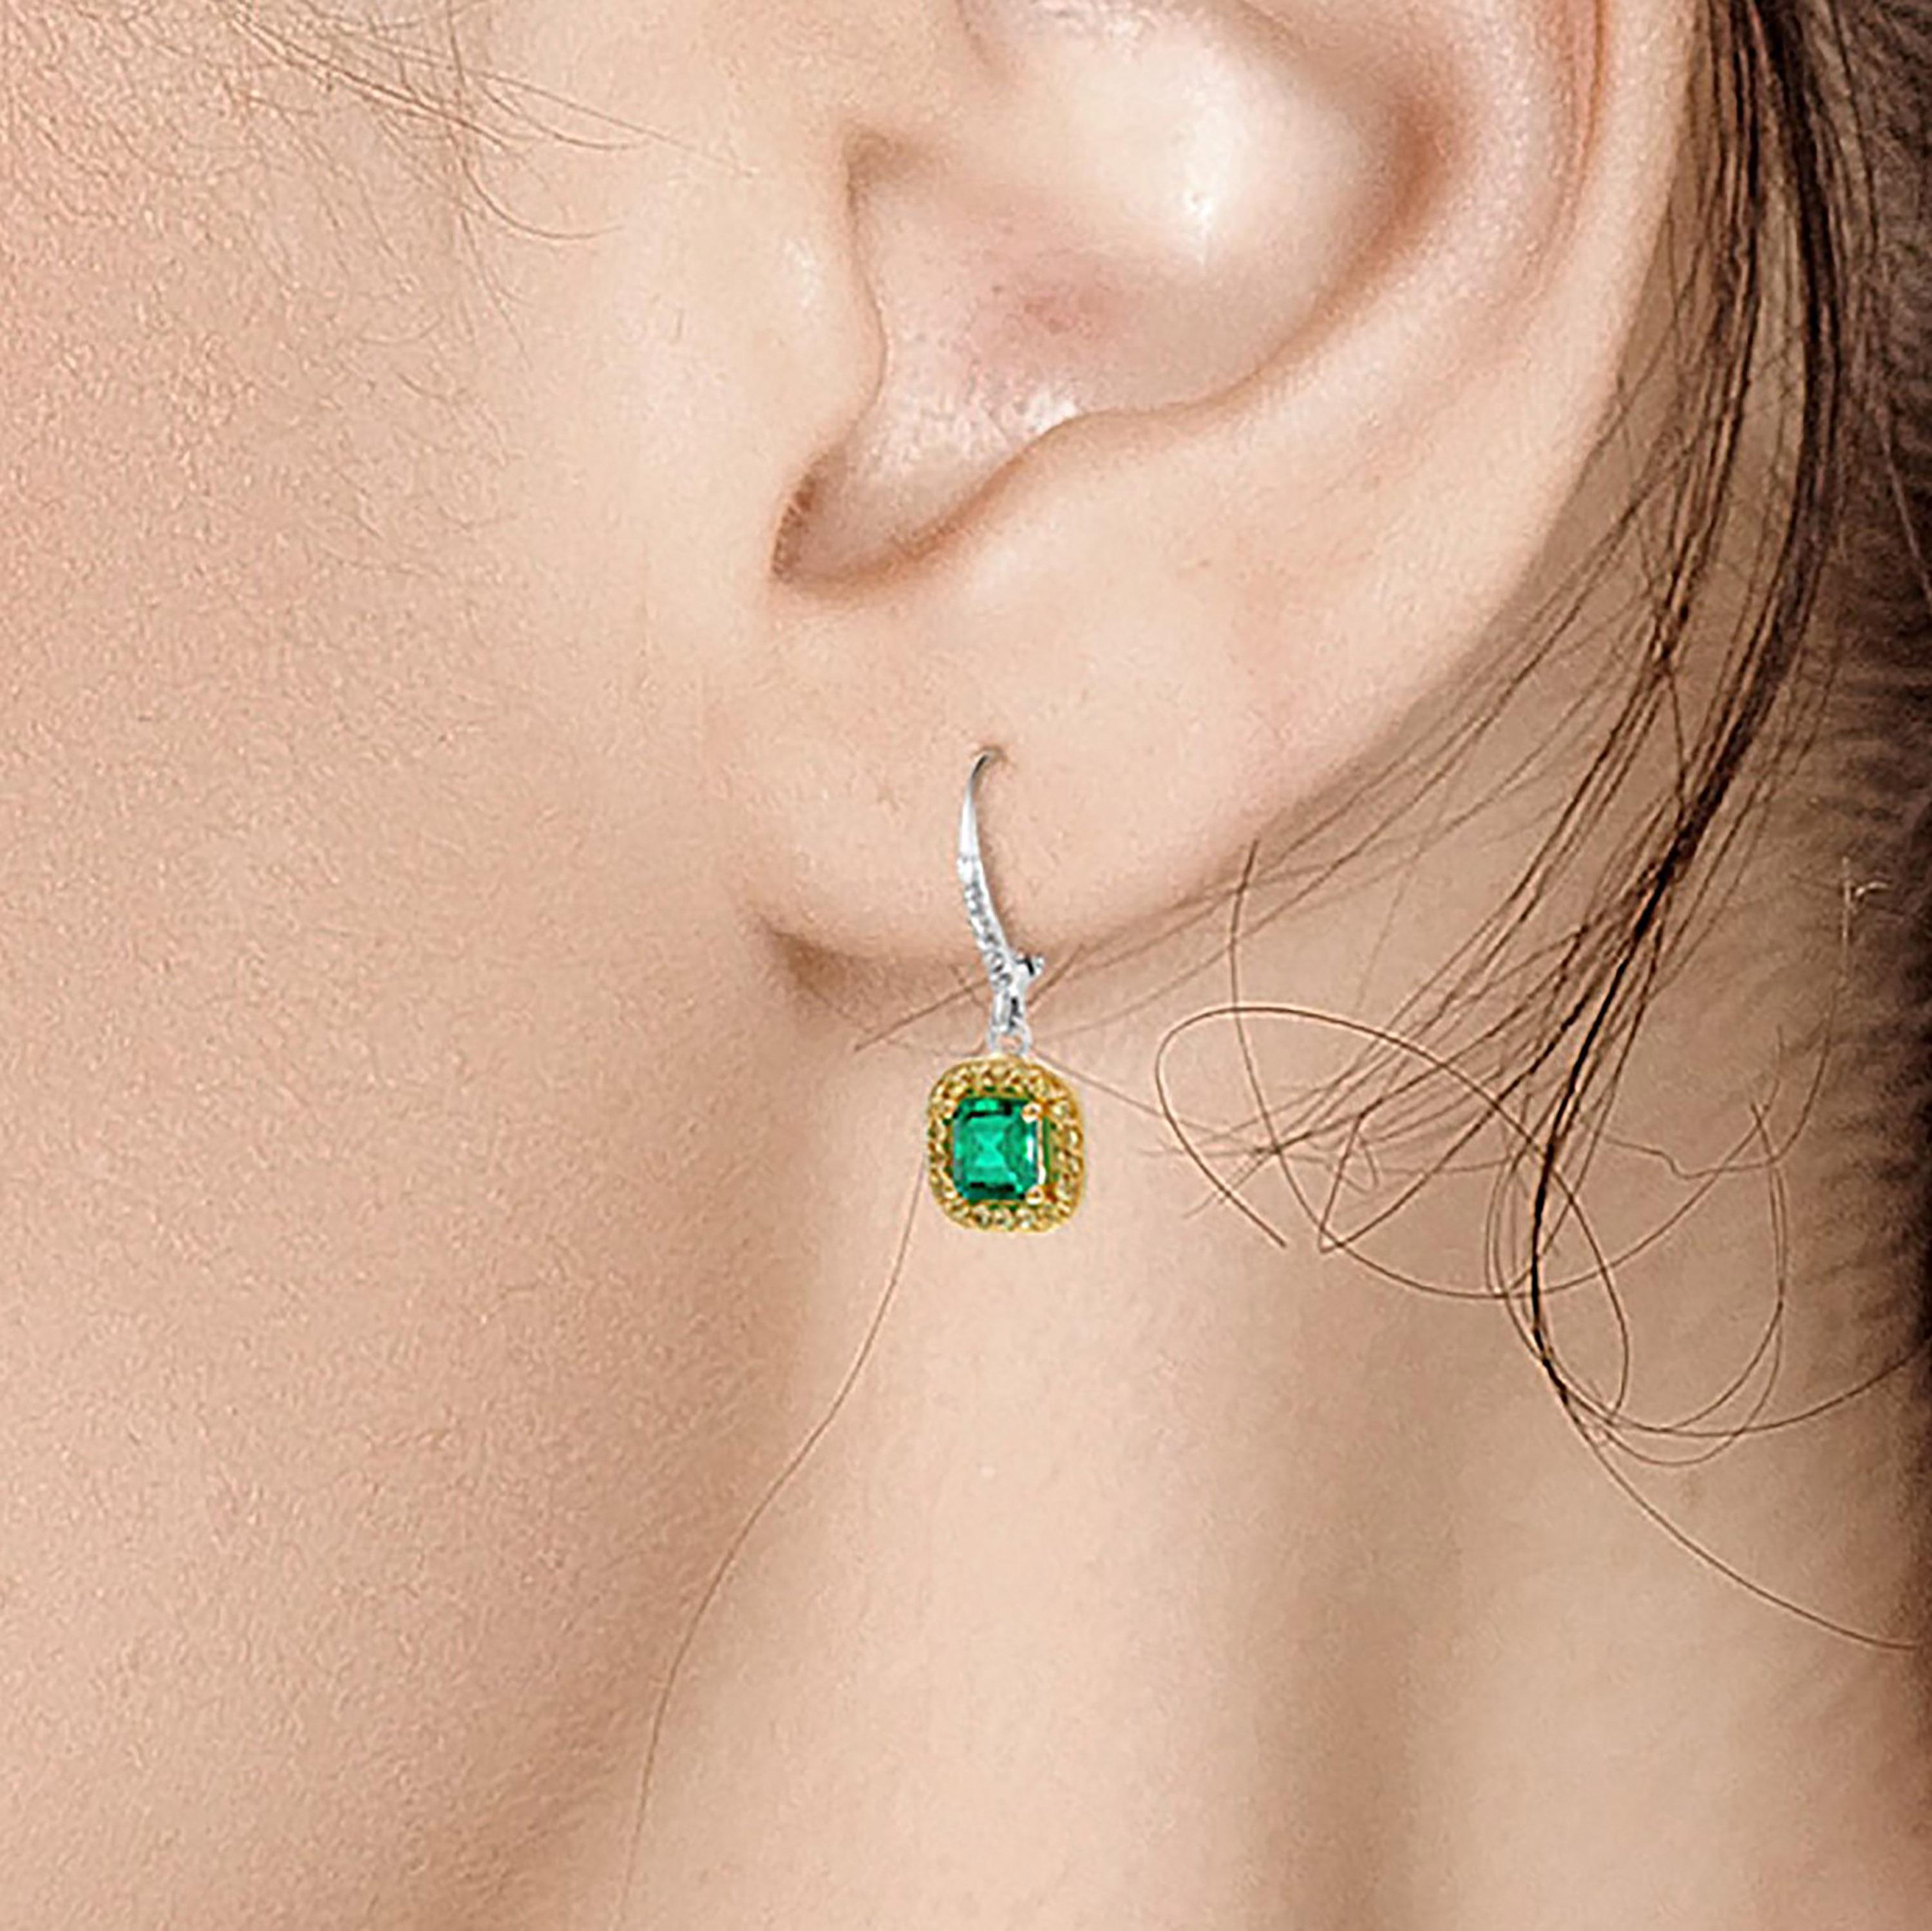 Fourteen karats white gold hoop cluster earrings 
Two Emerald cut emerald weighing 1.85 carat 
Diamonds weighing 0.24
Yellow Sapphire weighing 0.40 carat
Earrings measuring 1.5-